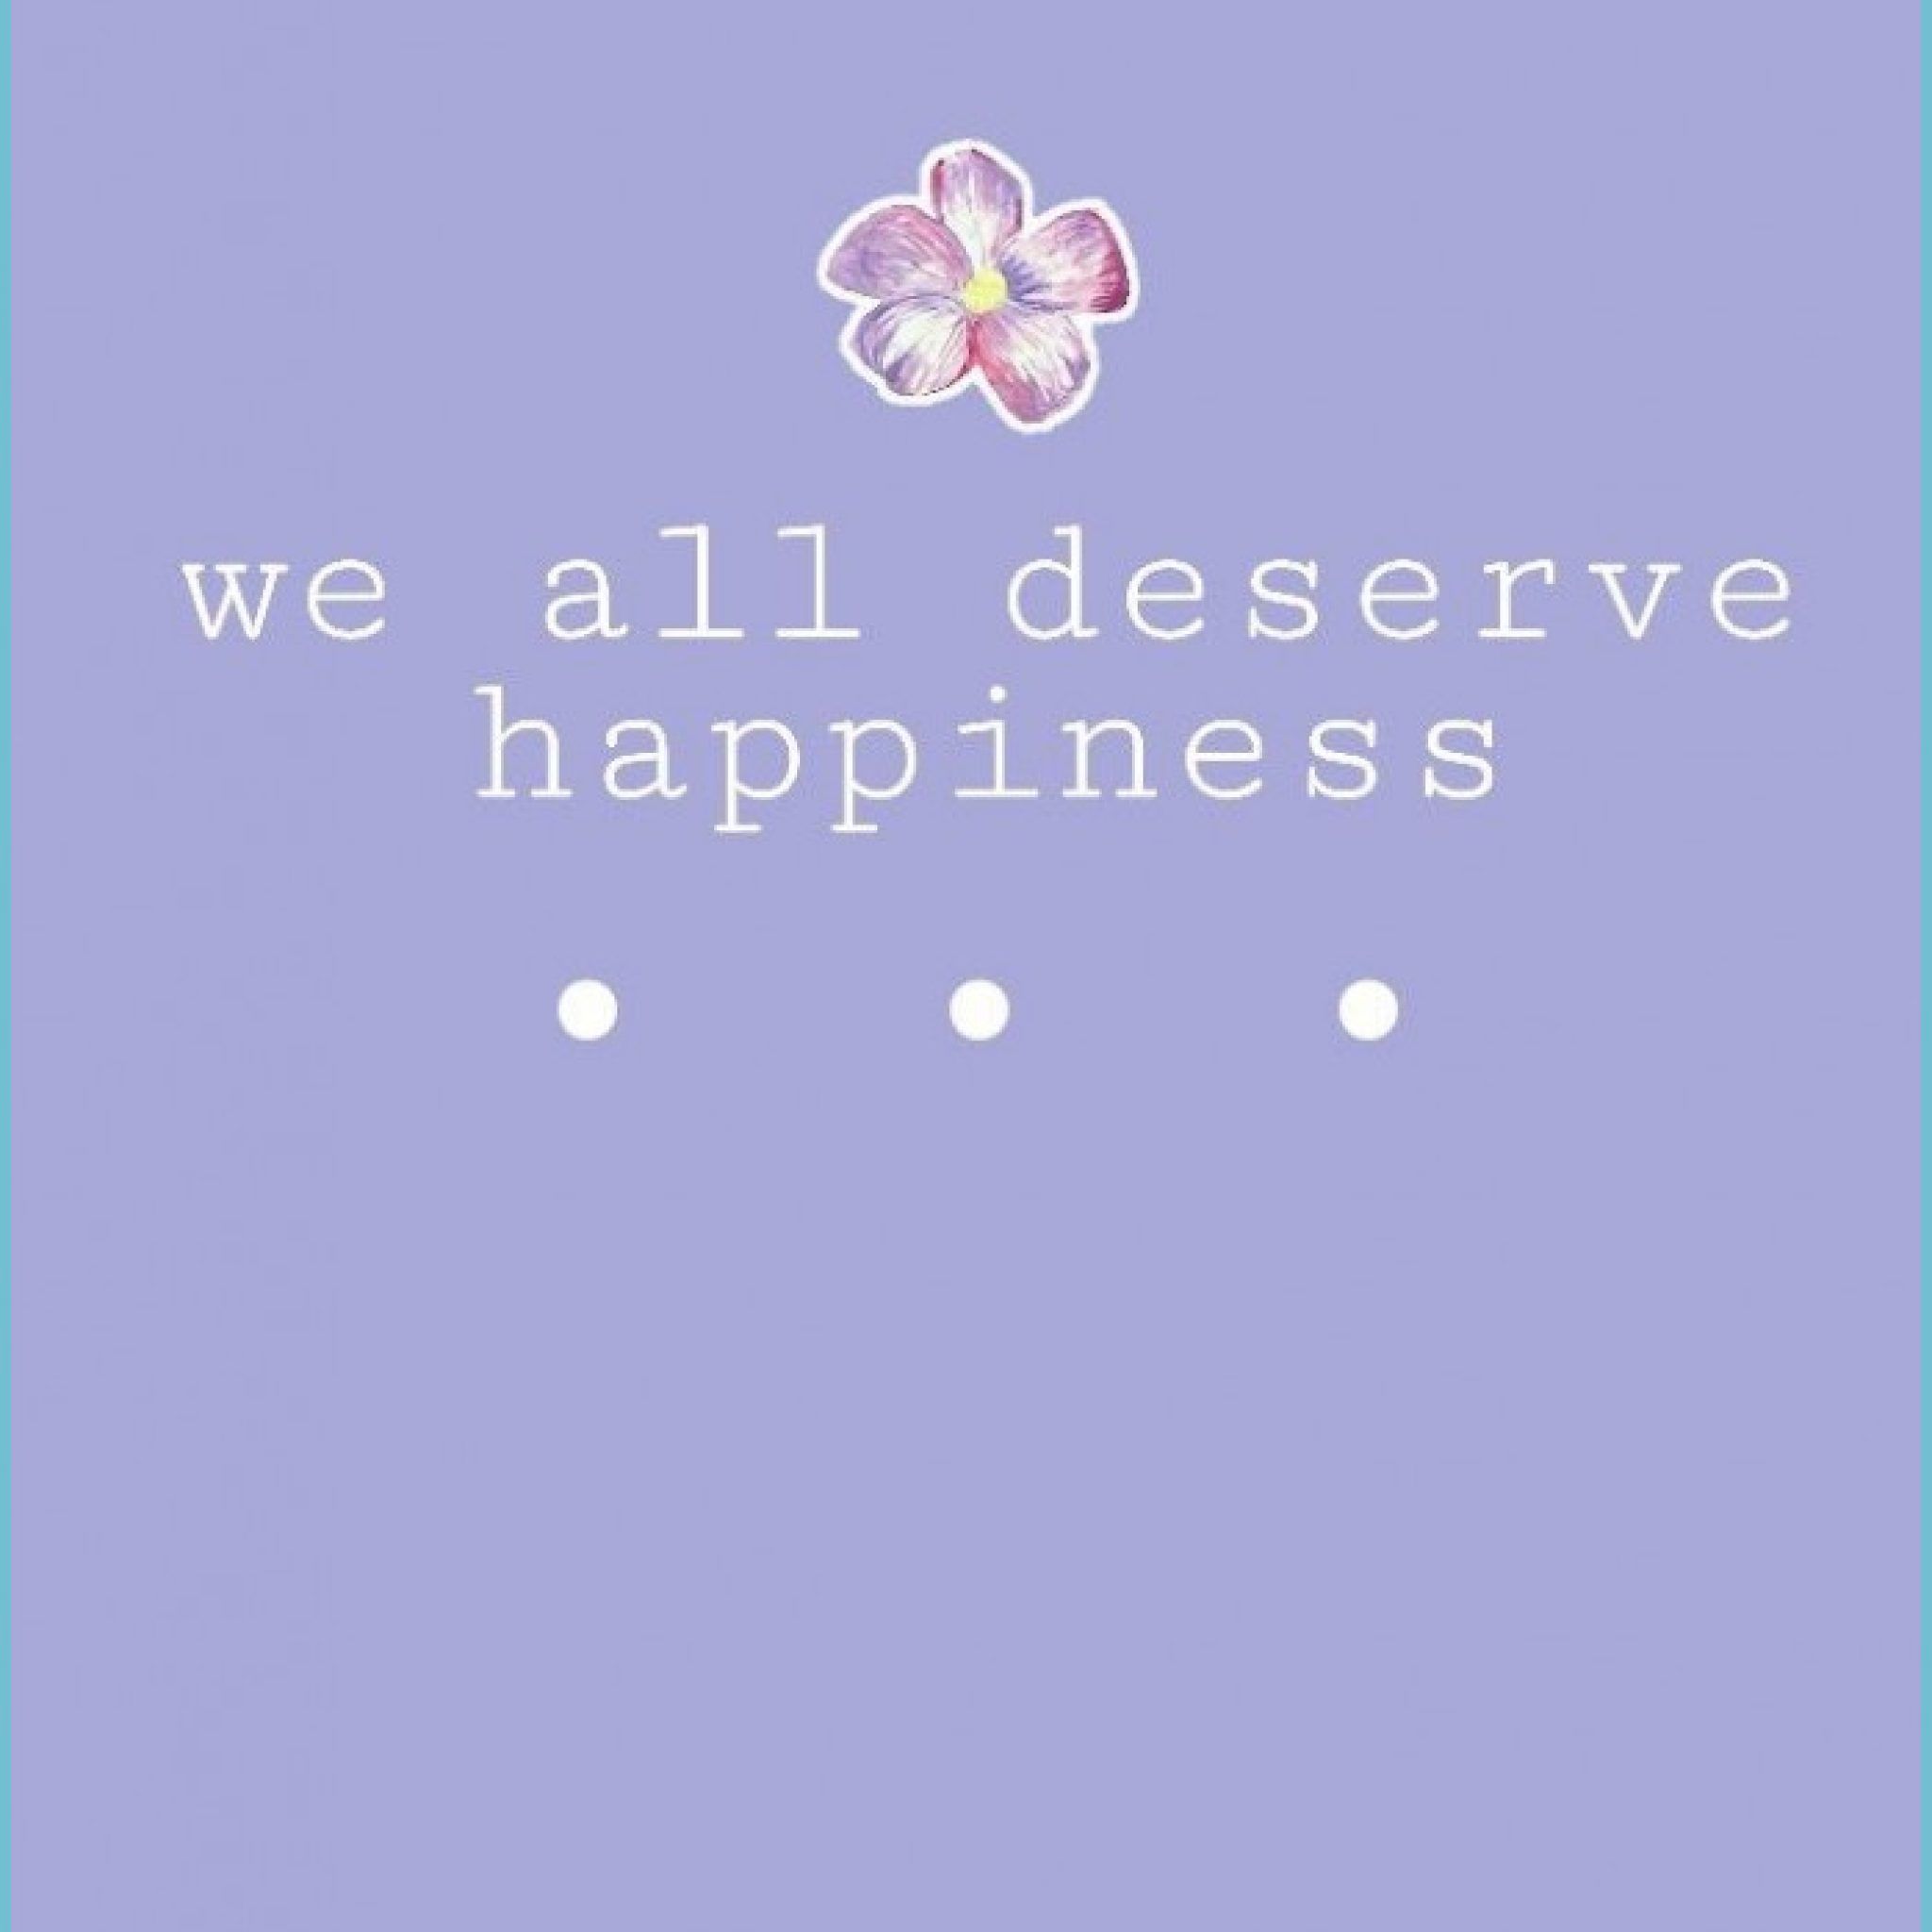 aeathetic #wallpaper #quote #tumblr #purple #love #life #happiness quote wallpaper